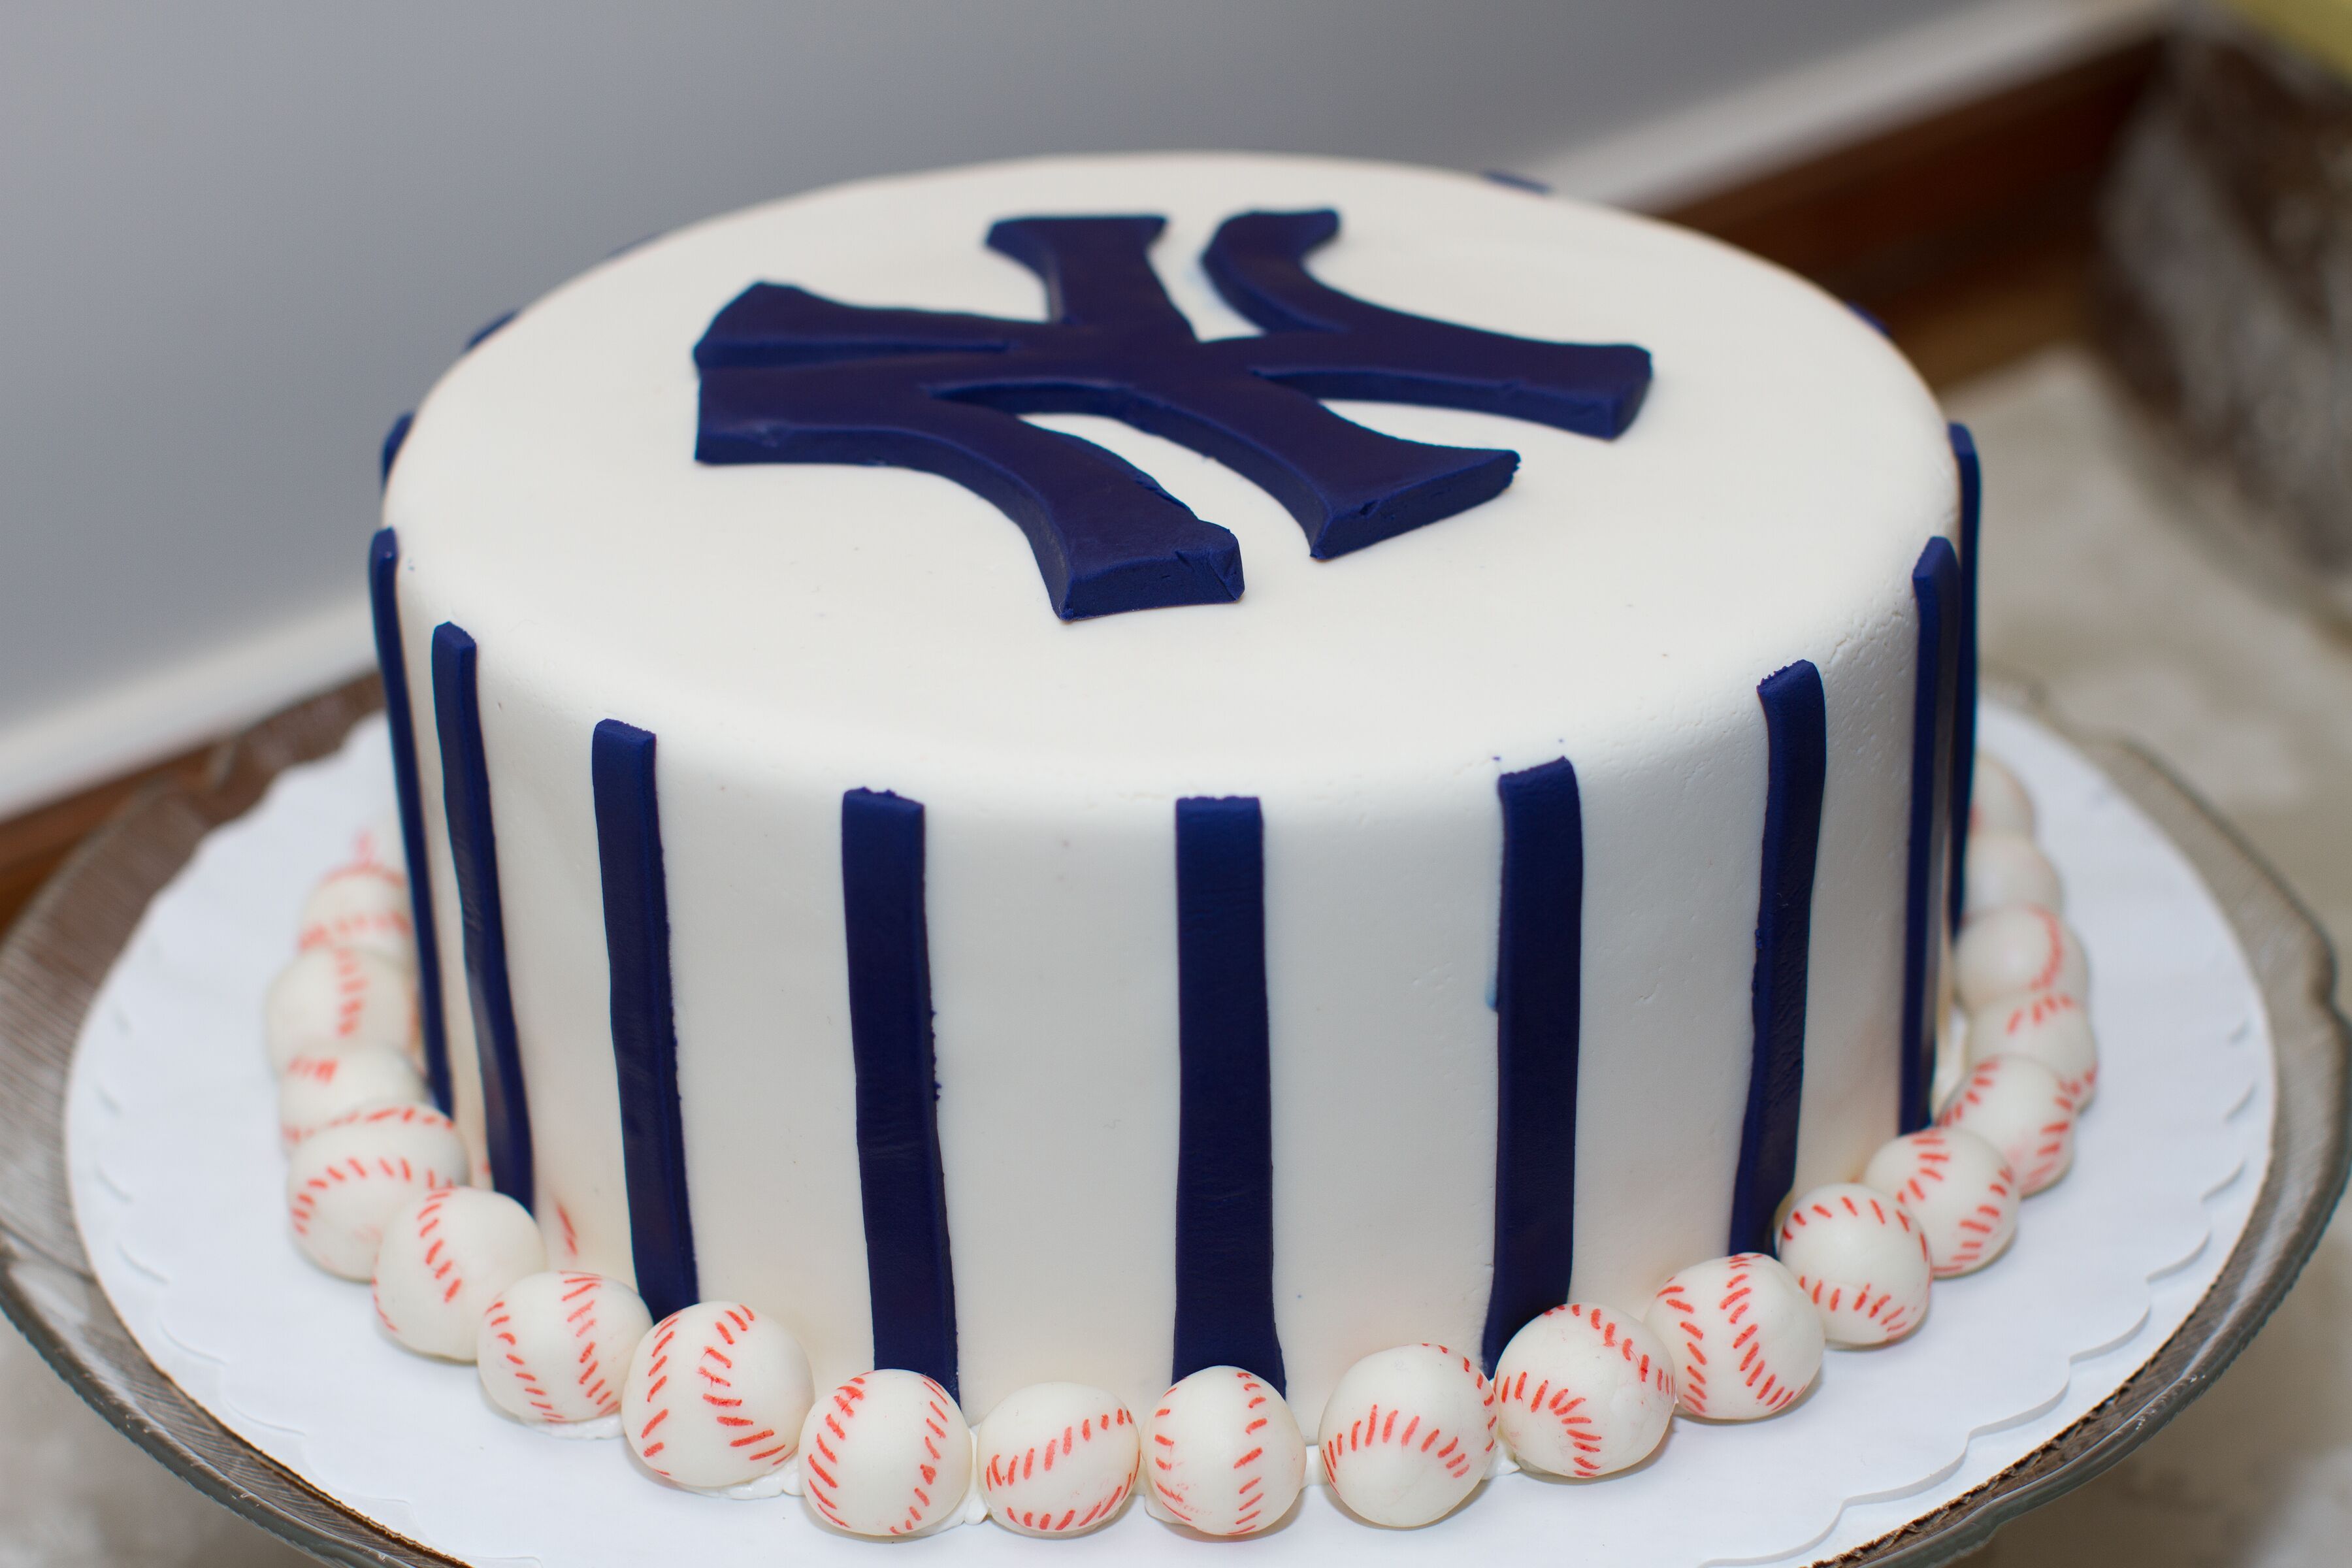 Baseball-Themed Groom's Cake with Yankees Logo